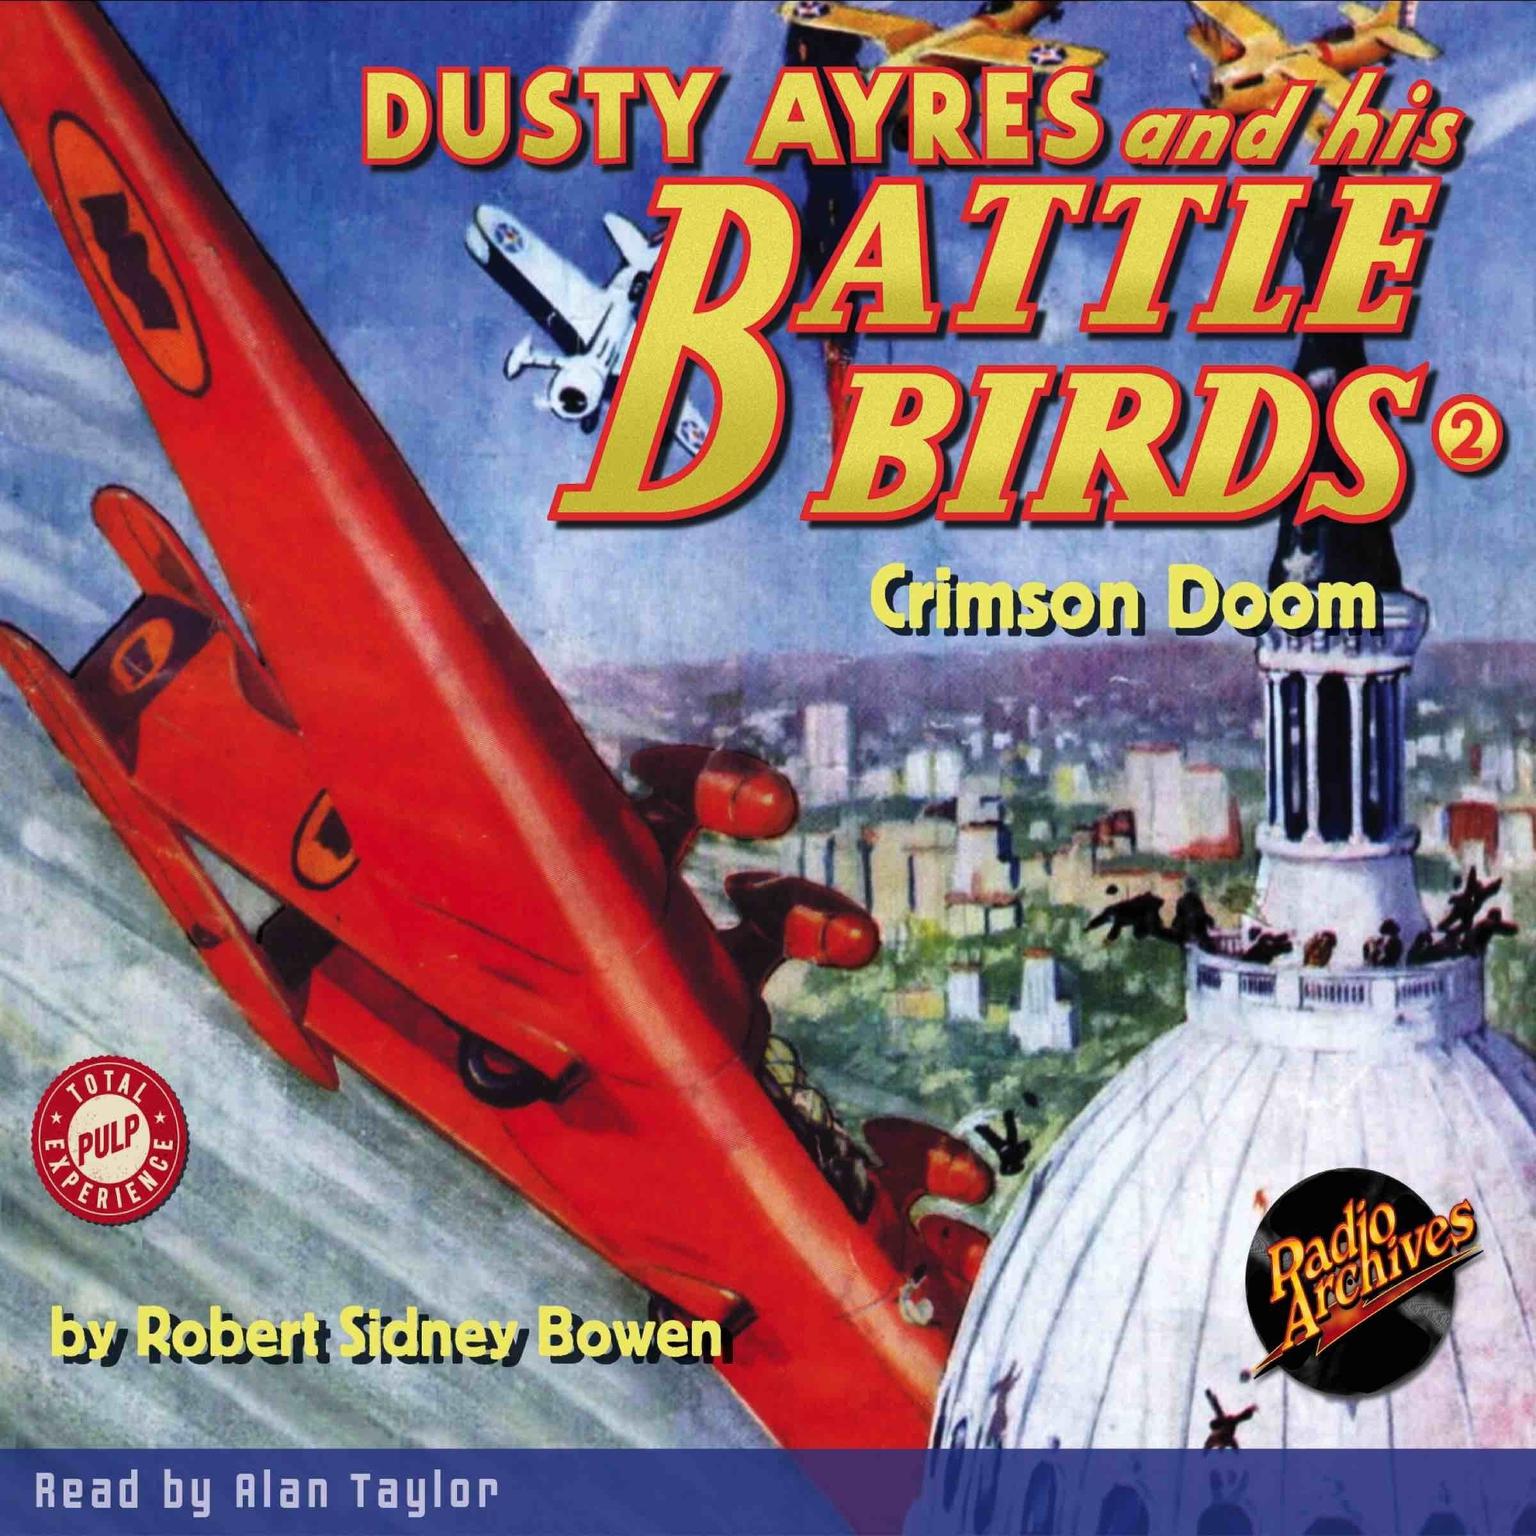 Dusty Ayres and his Battle Birds #2: Crimson Doom Audiobook, by Robert Sidney Bowen